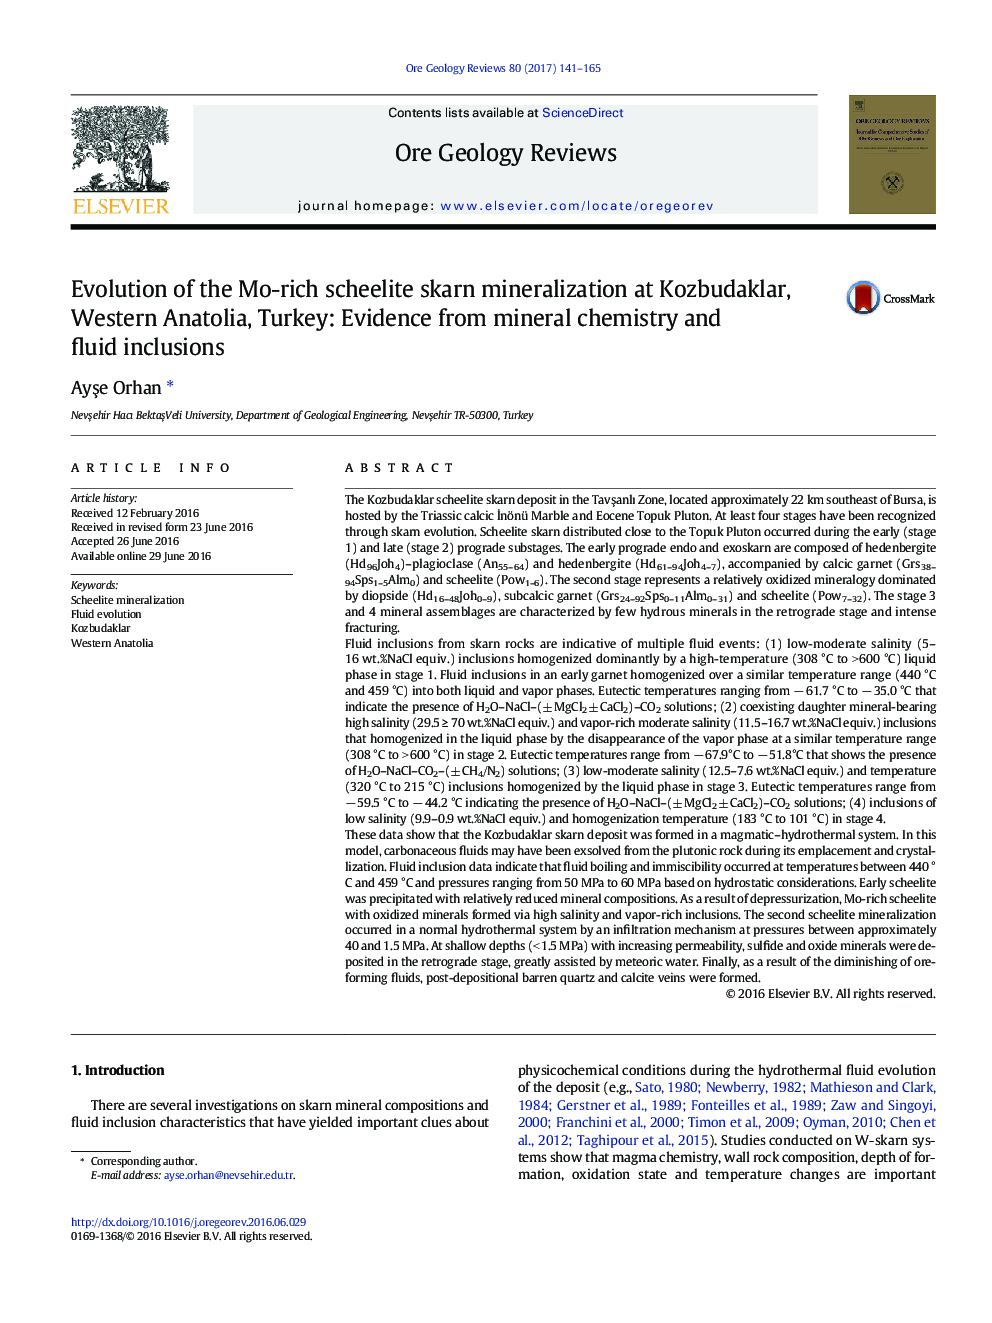 Evolution of the Mo-rich scheelite skarn mineralization at Kozbudaklar, Western Anatolia, Turkey: Evidence from mineral chemistry and fluid inclusions